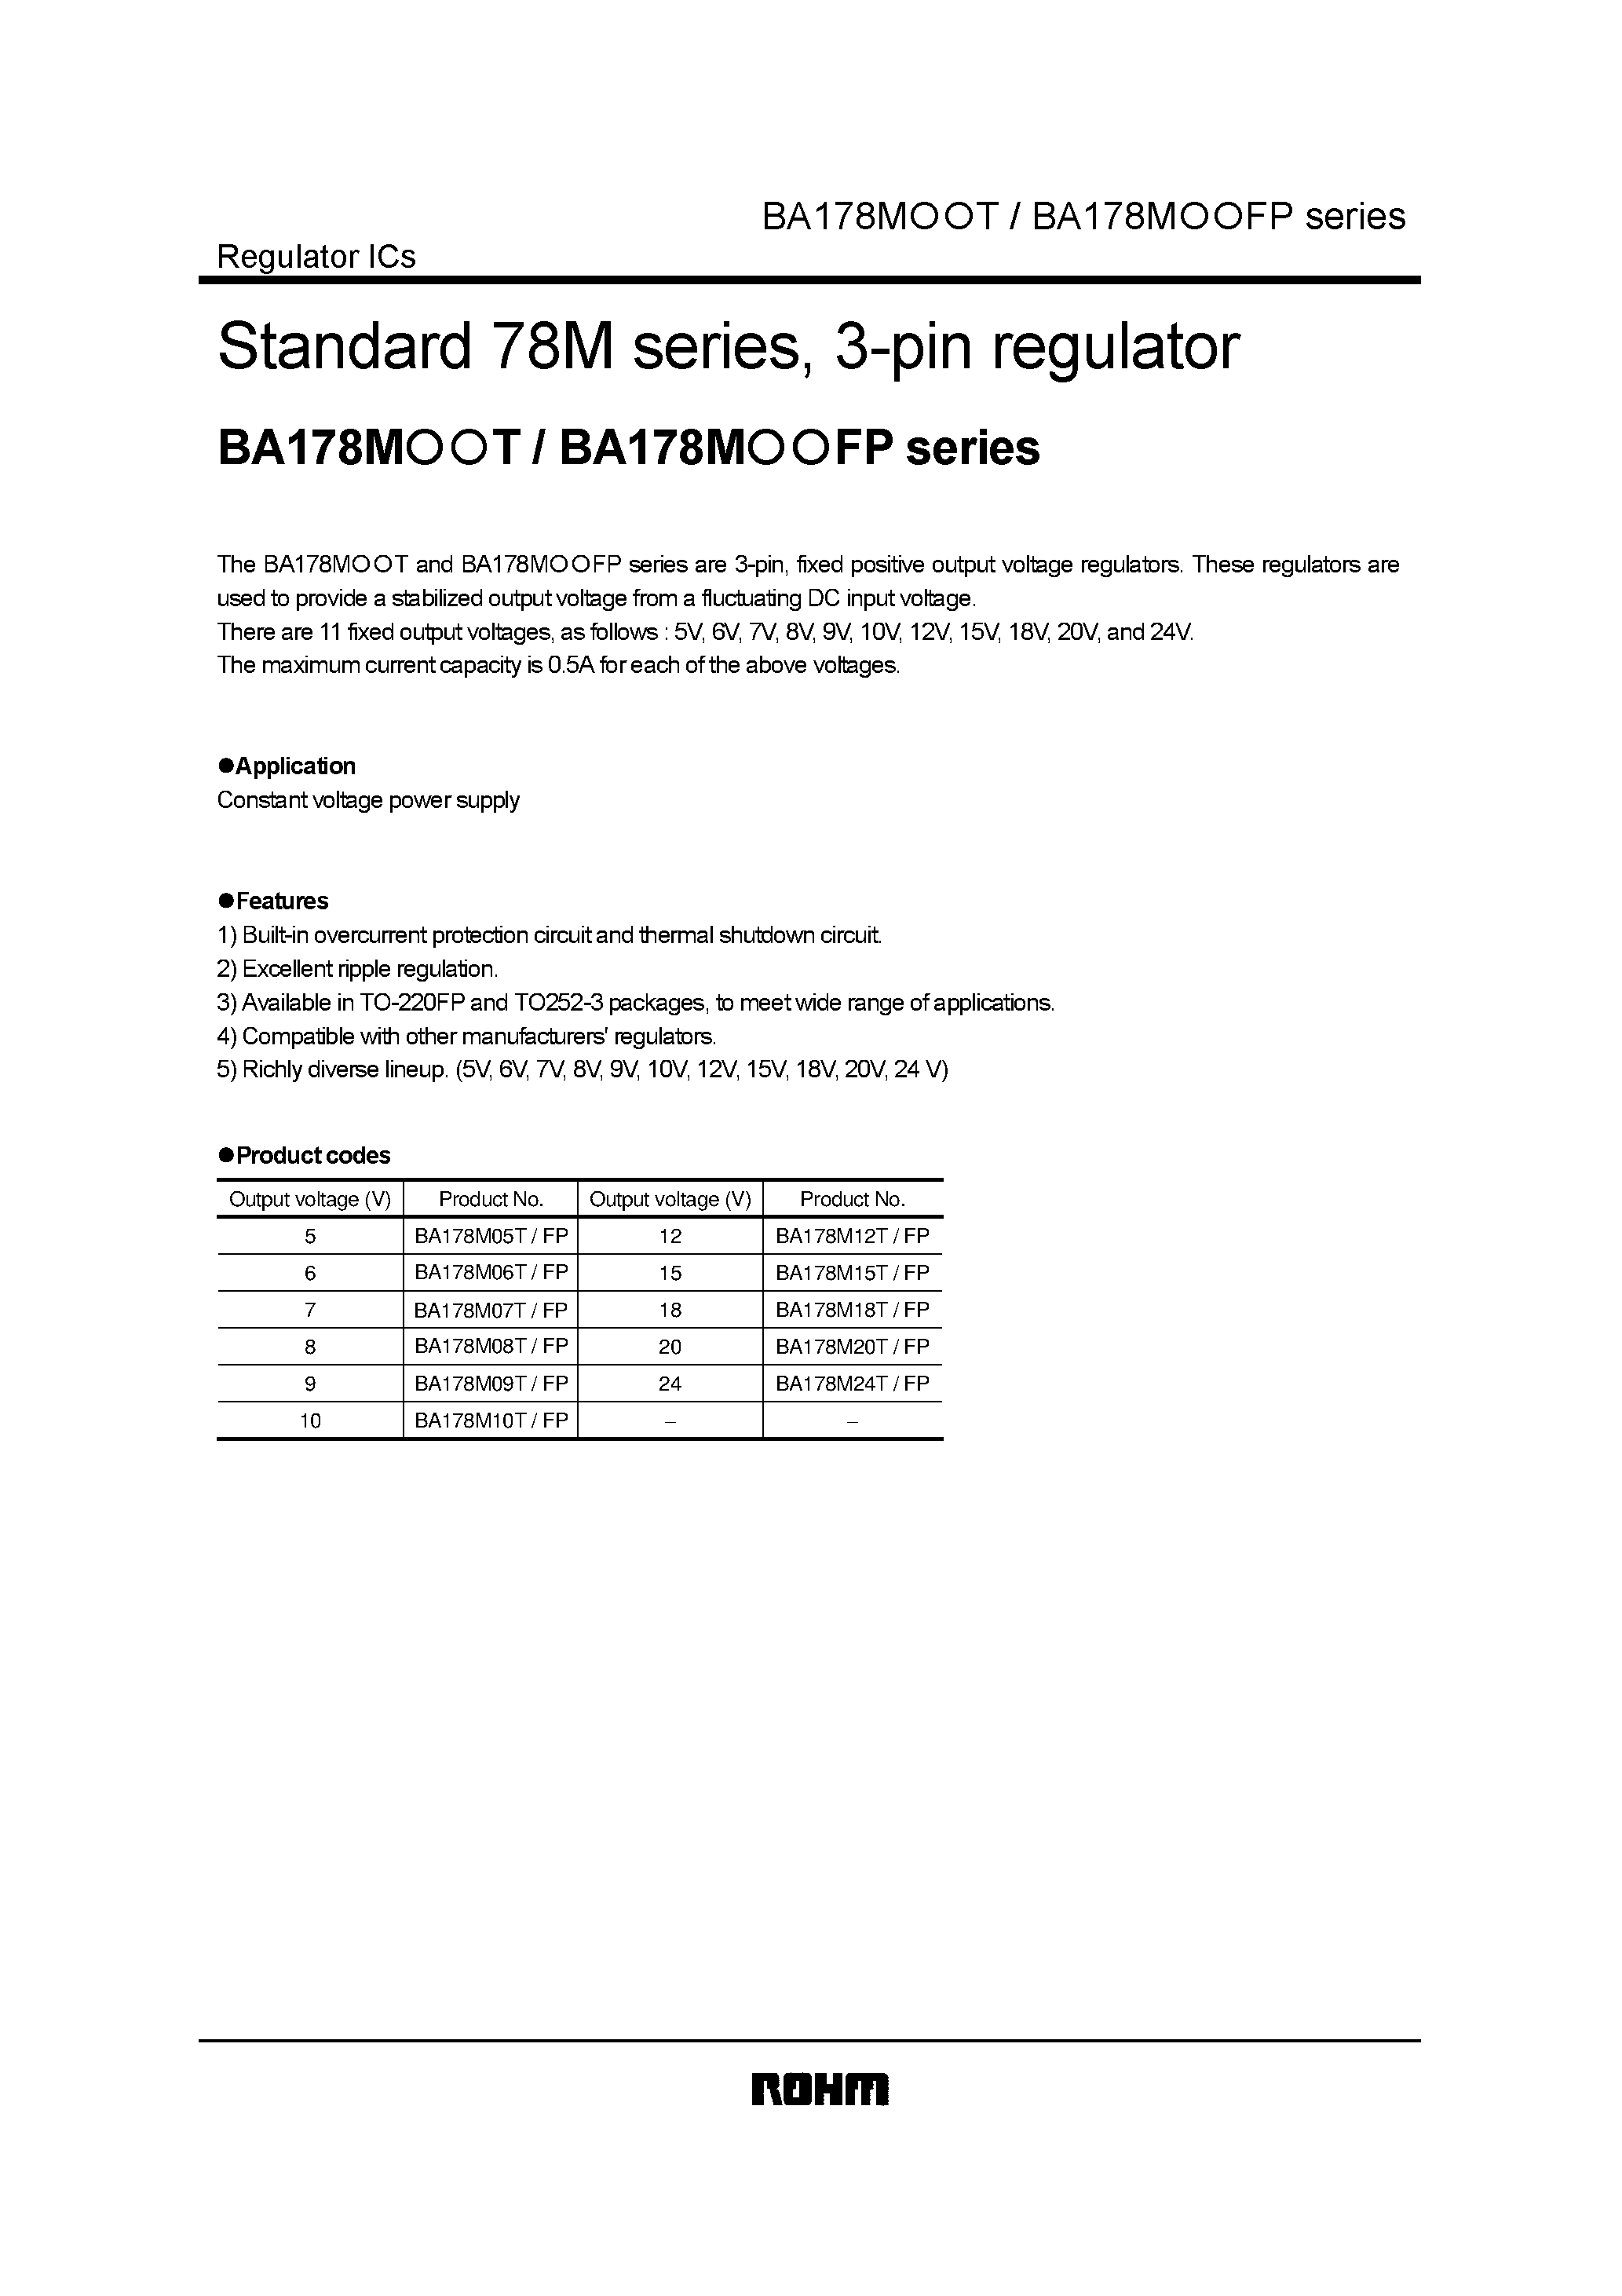 Даташит BA178MT - Standard 78M series/ 3-pin regulator страница 1